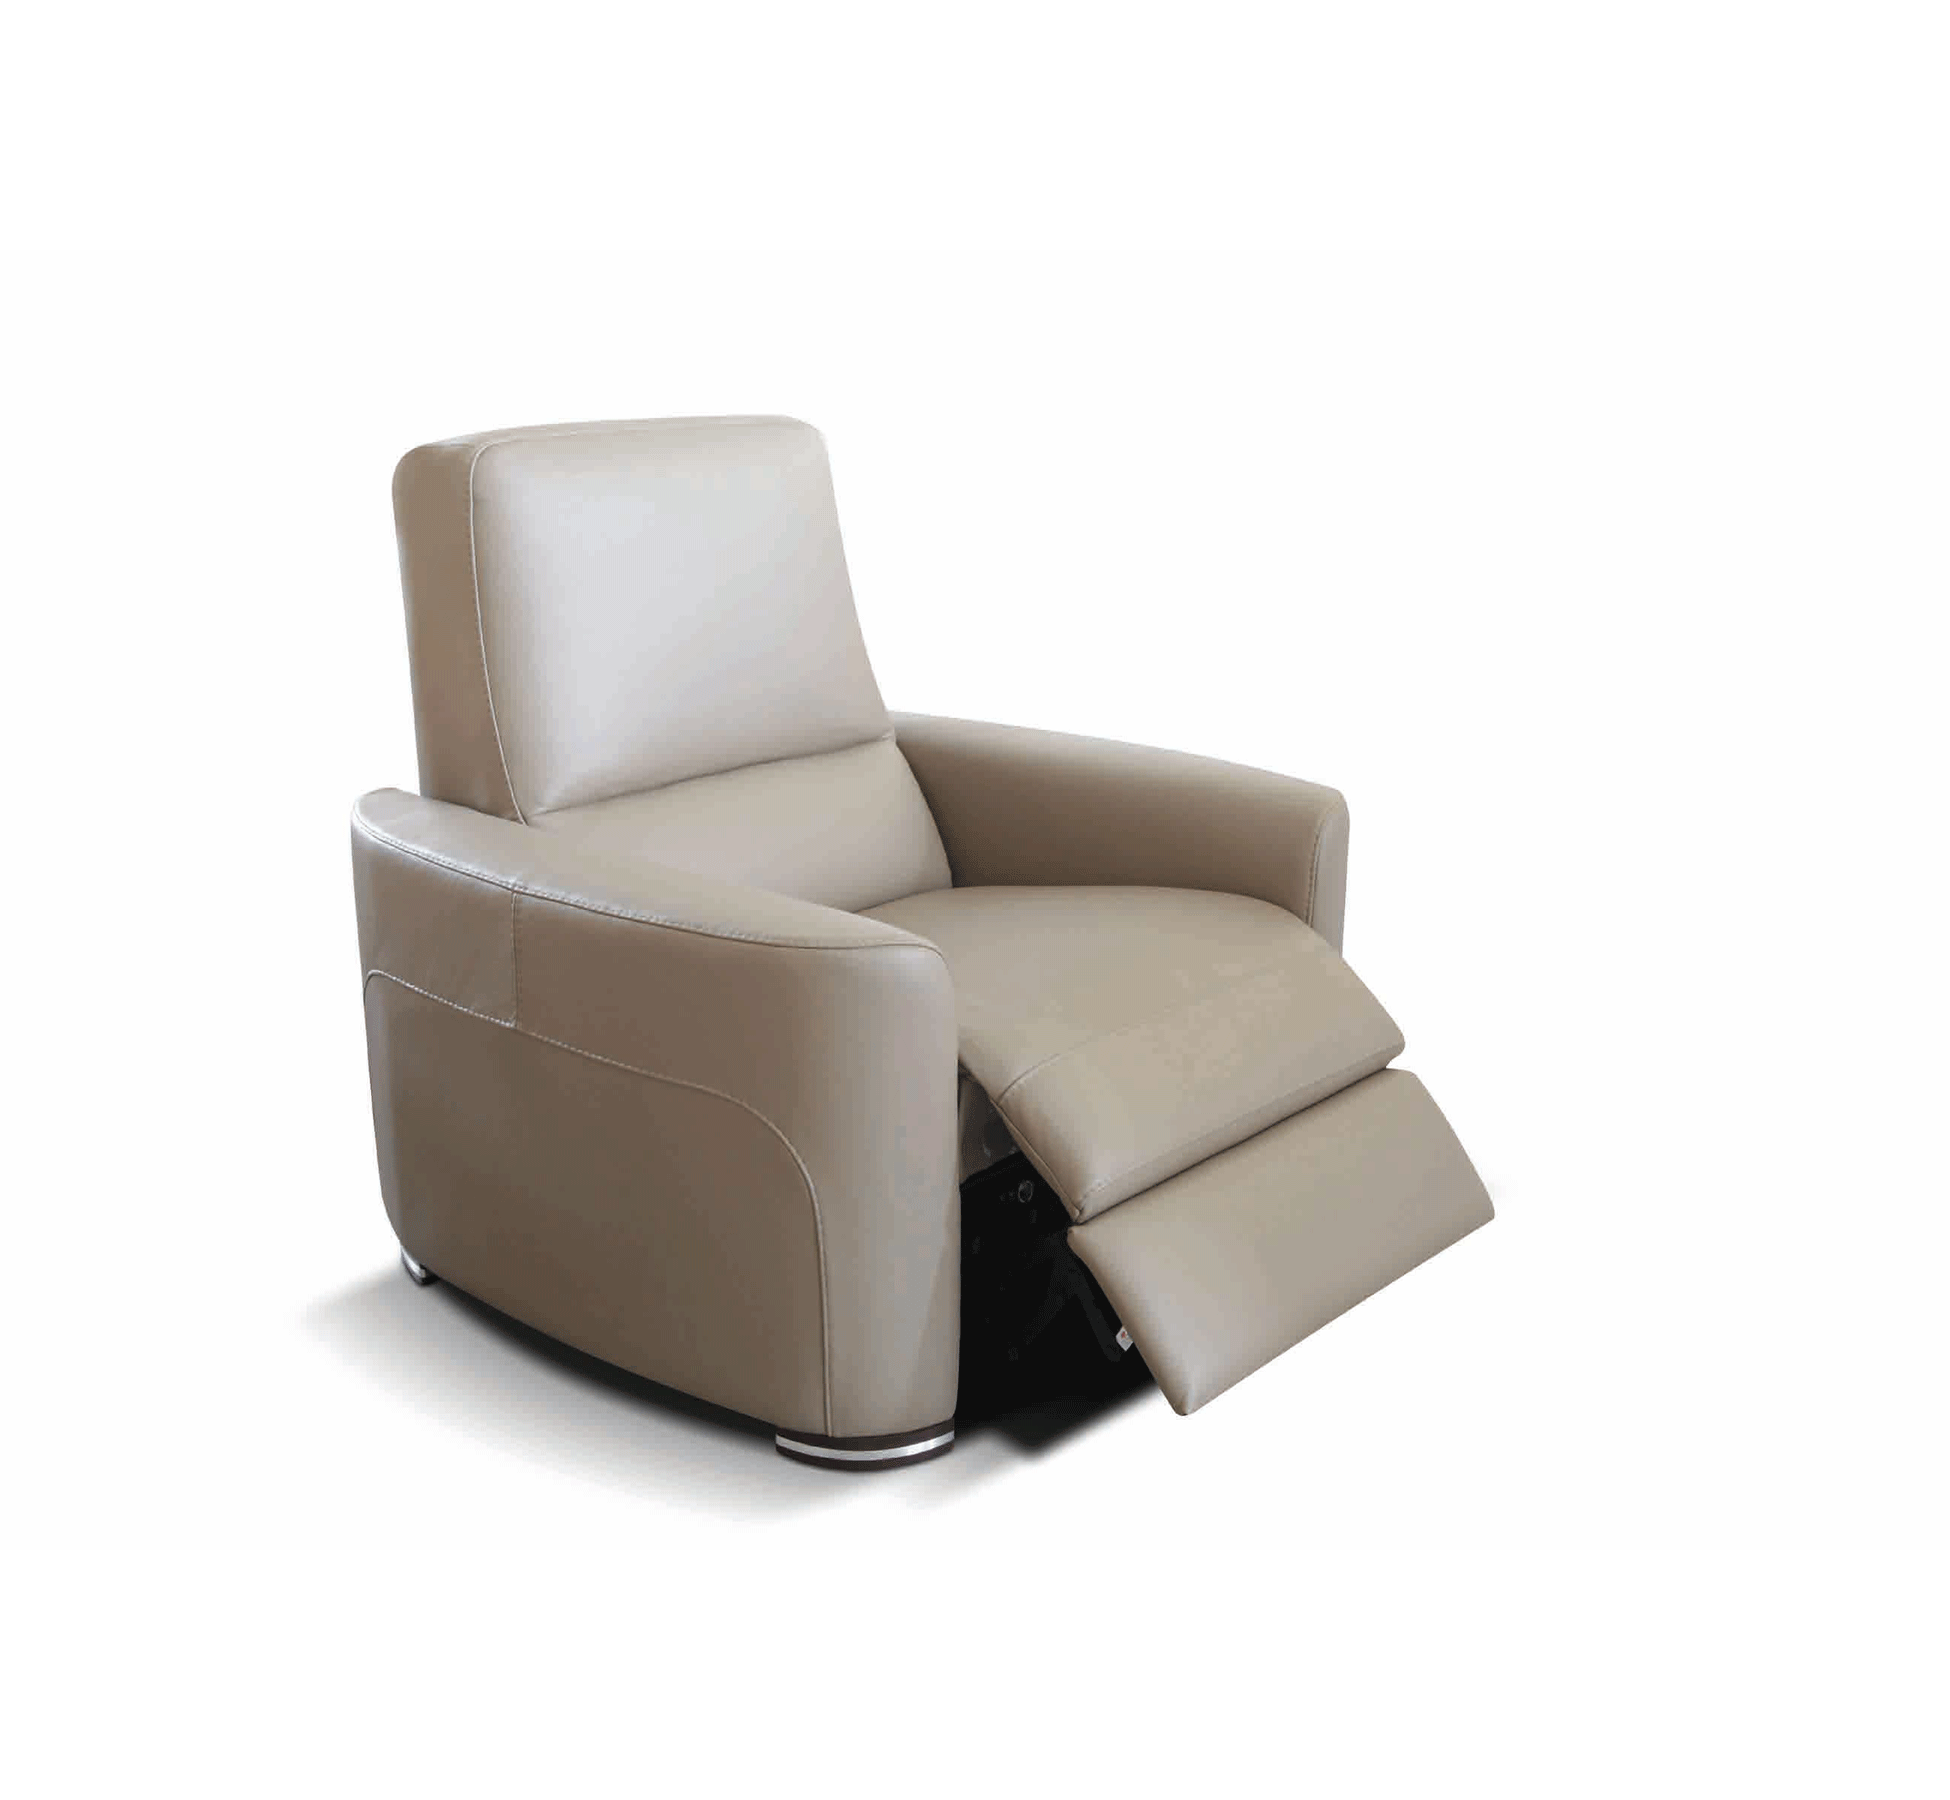 Clearance Living Room Teramo Chair